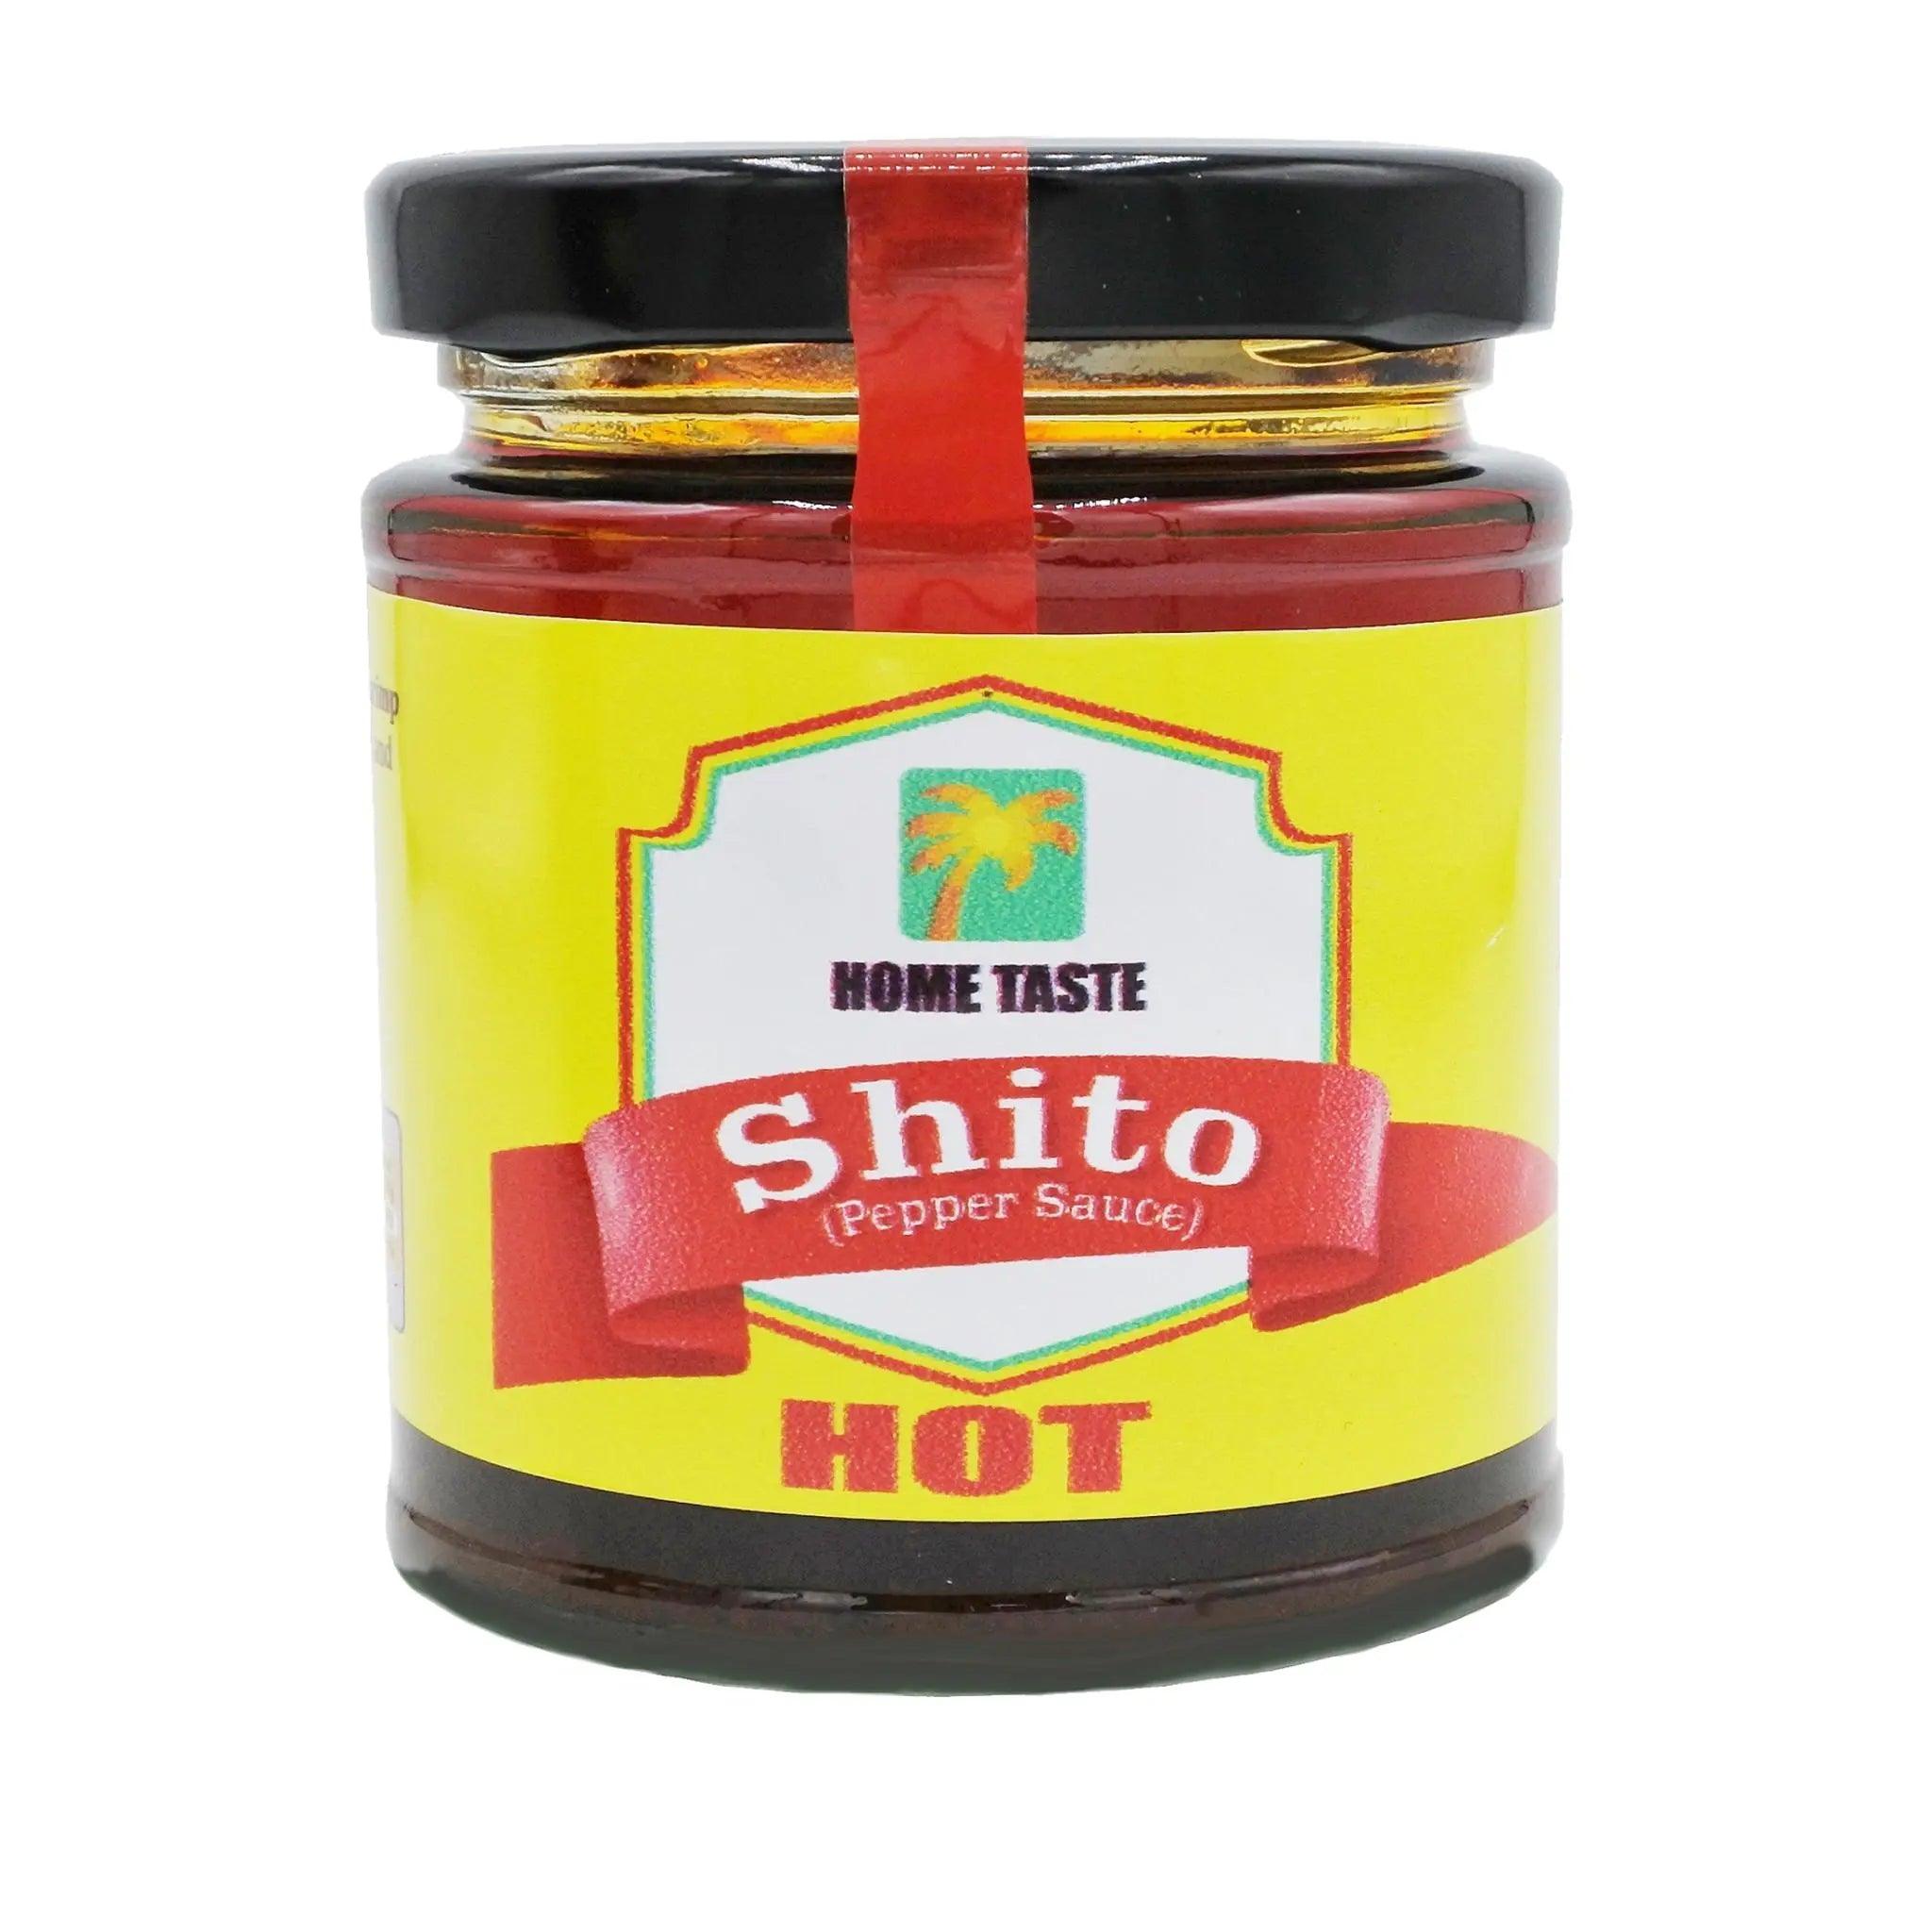 Home Taste Shito Hot - Honesty Sales U.K